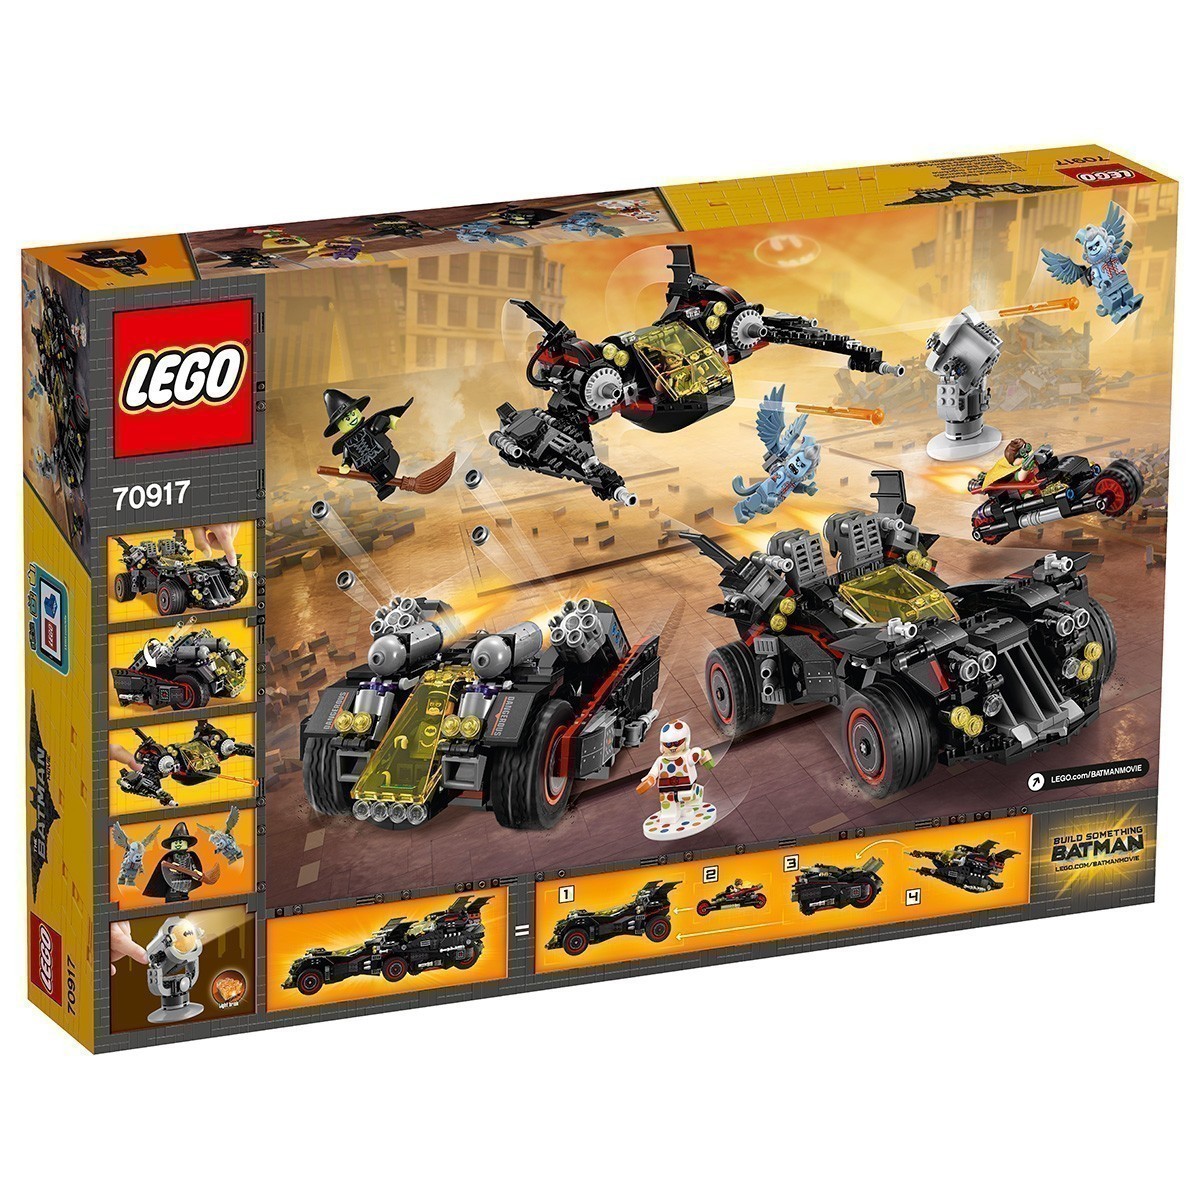 LEGO - The Batman Movie - 70917 The Ultimate Batmobile